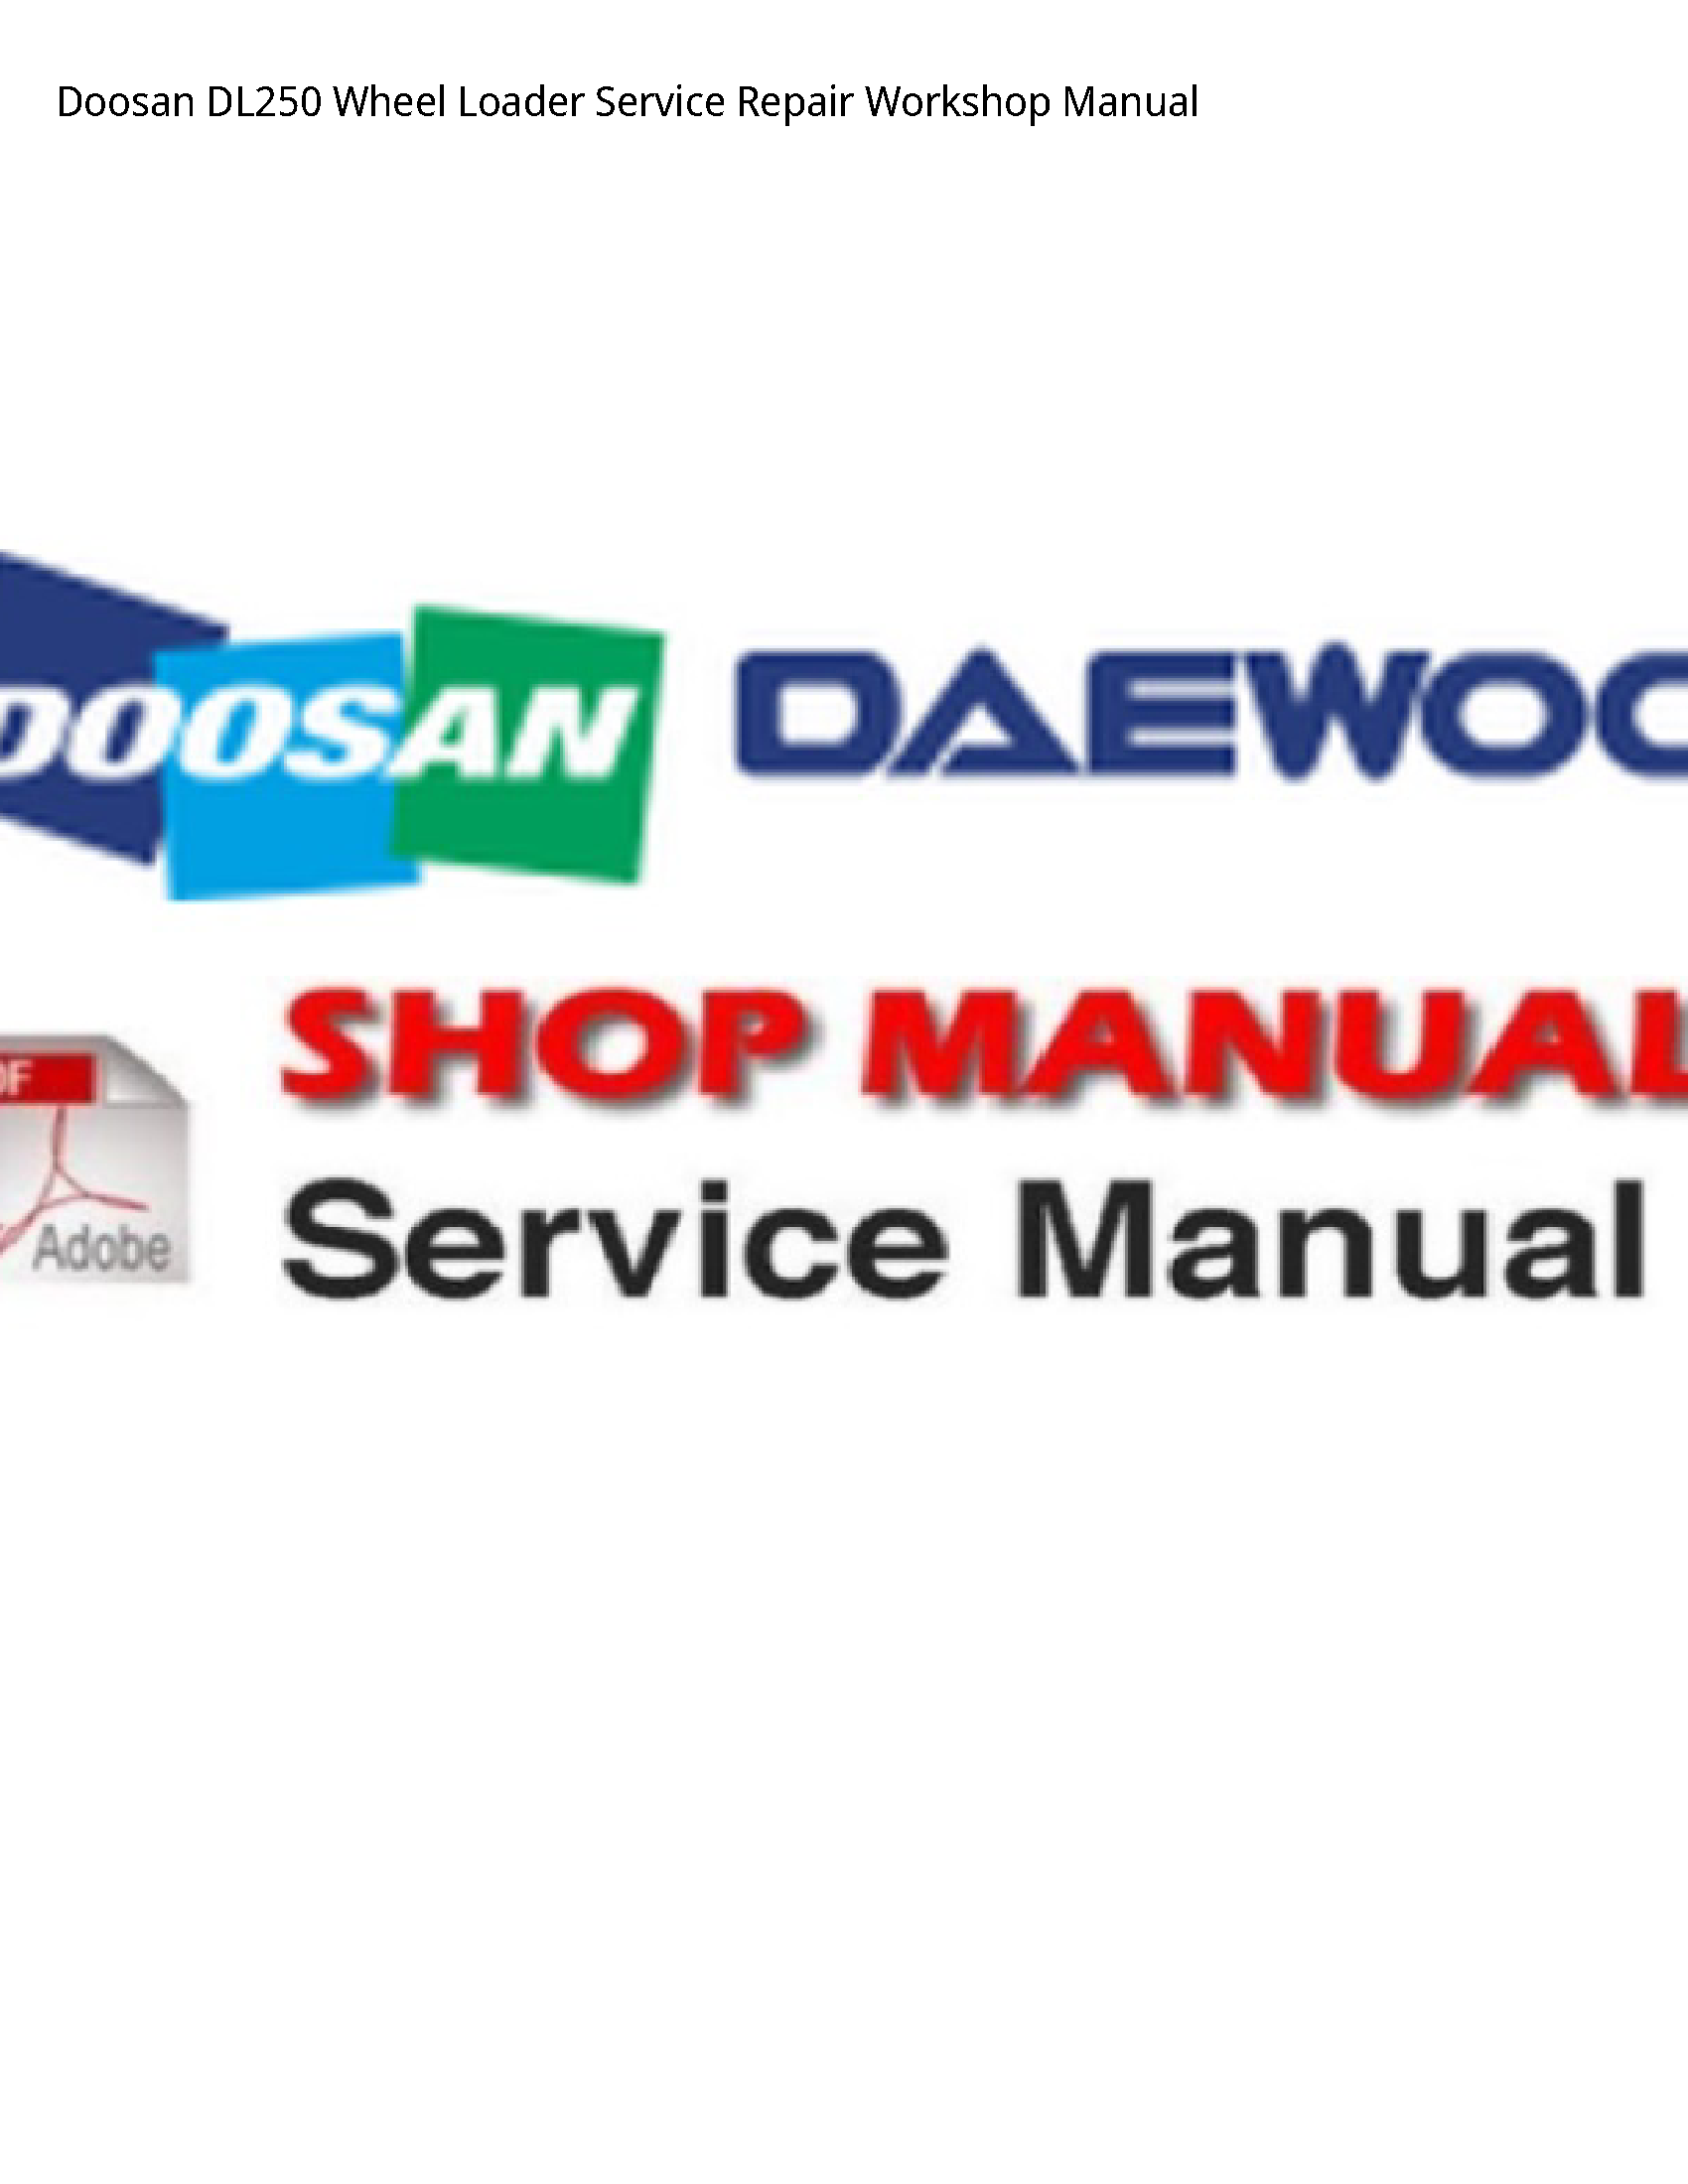 Doosan DL250 Wheel Loader manual